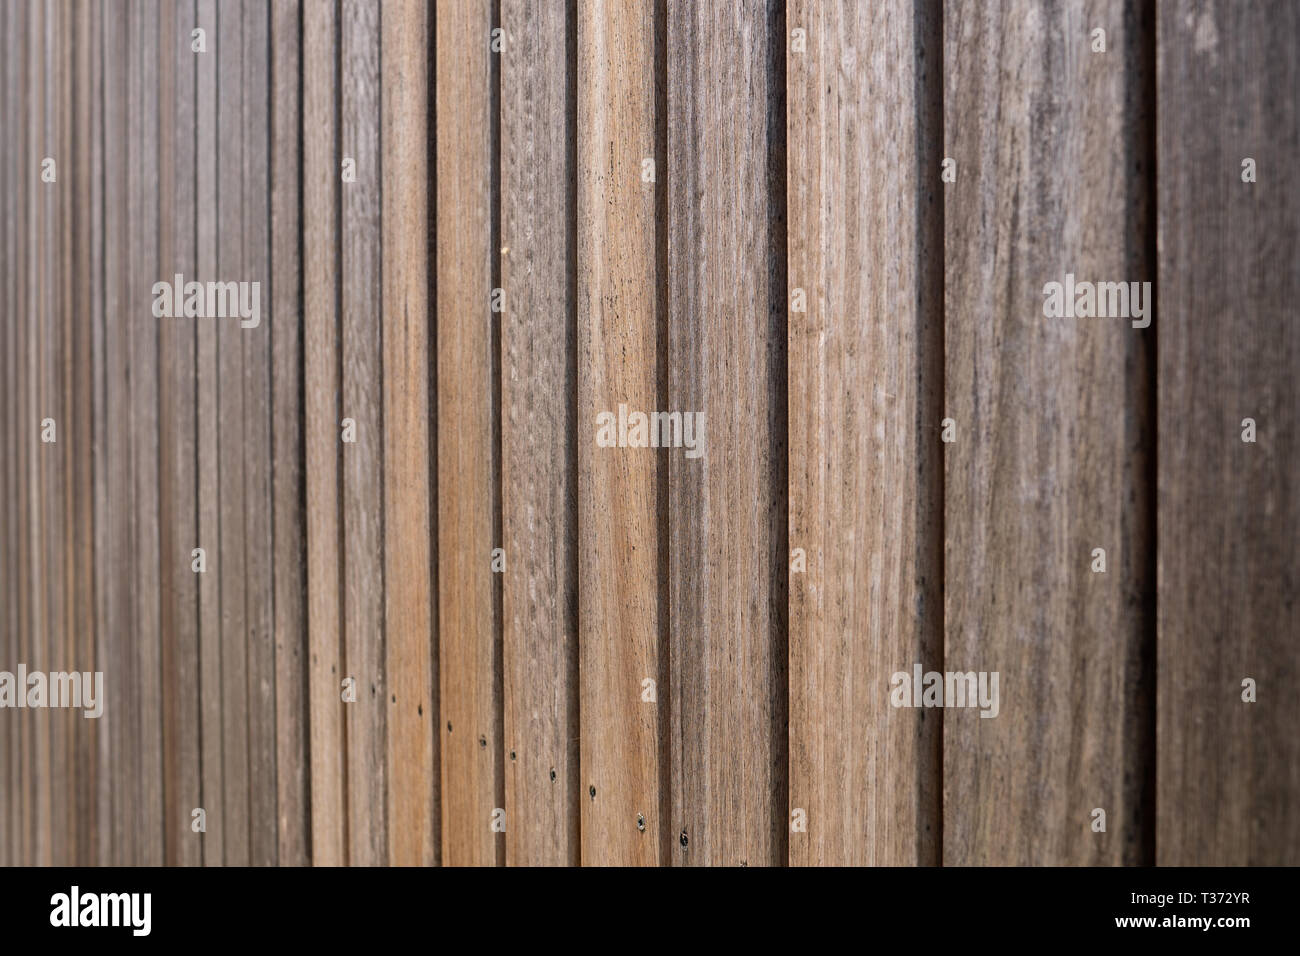 Weathered Wood Panel Texture Background Wall Cladding Made Of Aged Iroko Wood Planks Stock Photo Alamy